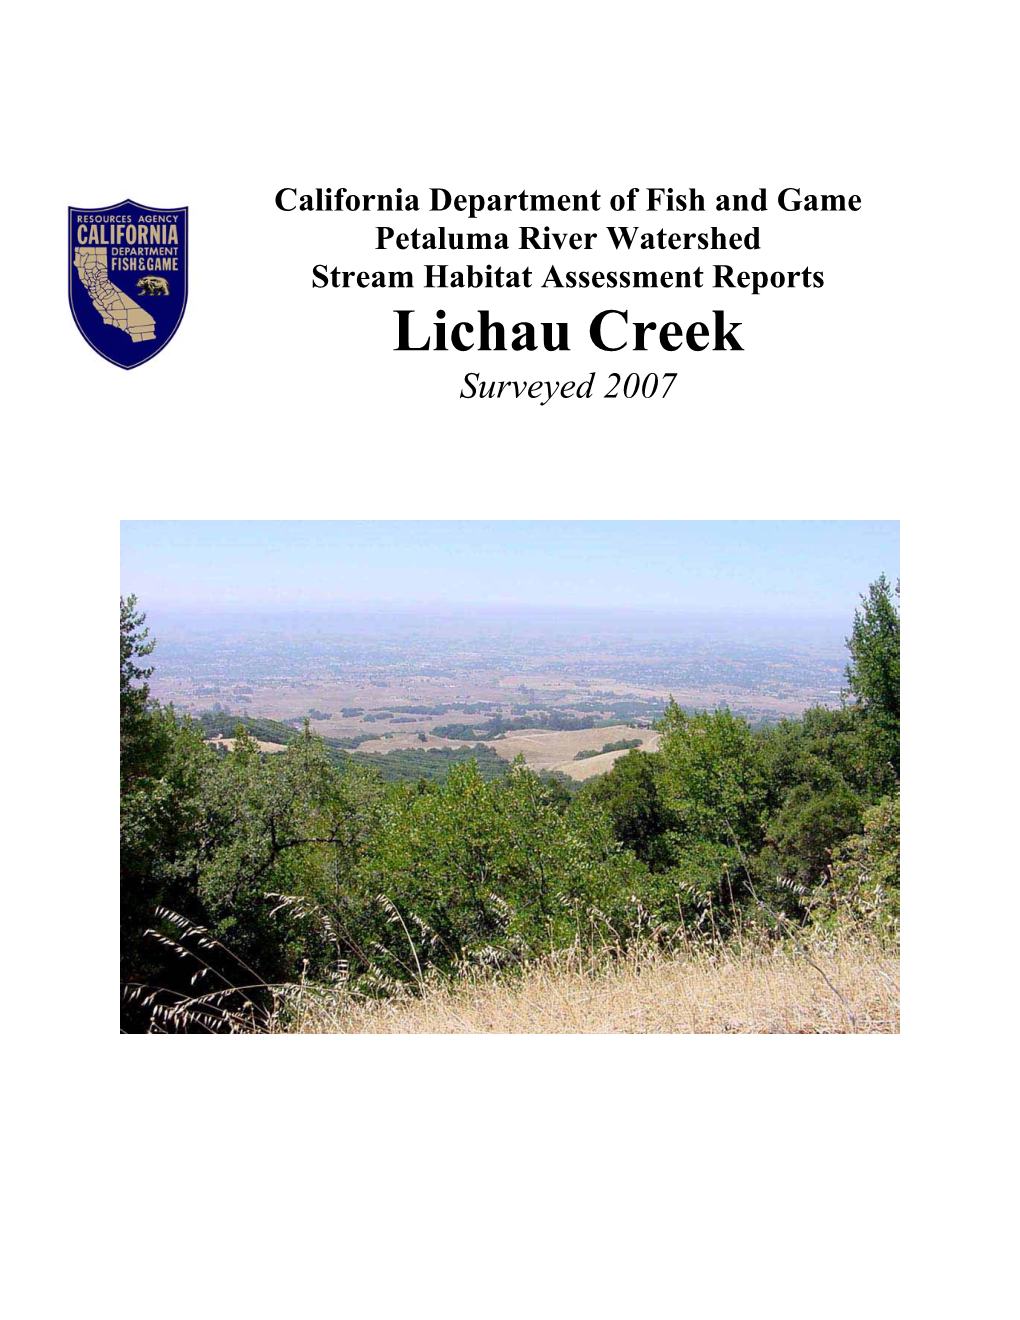 Lichau Creek Surveyed 2007